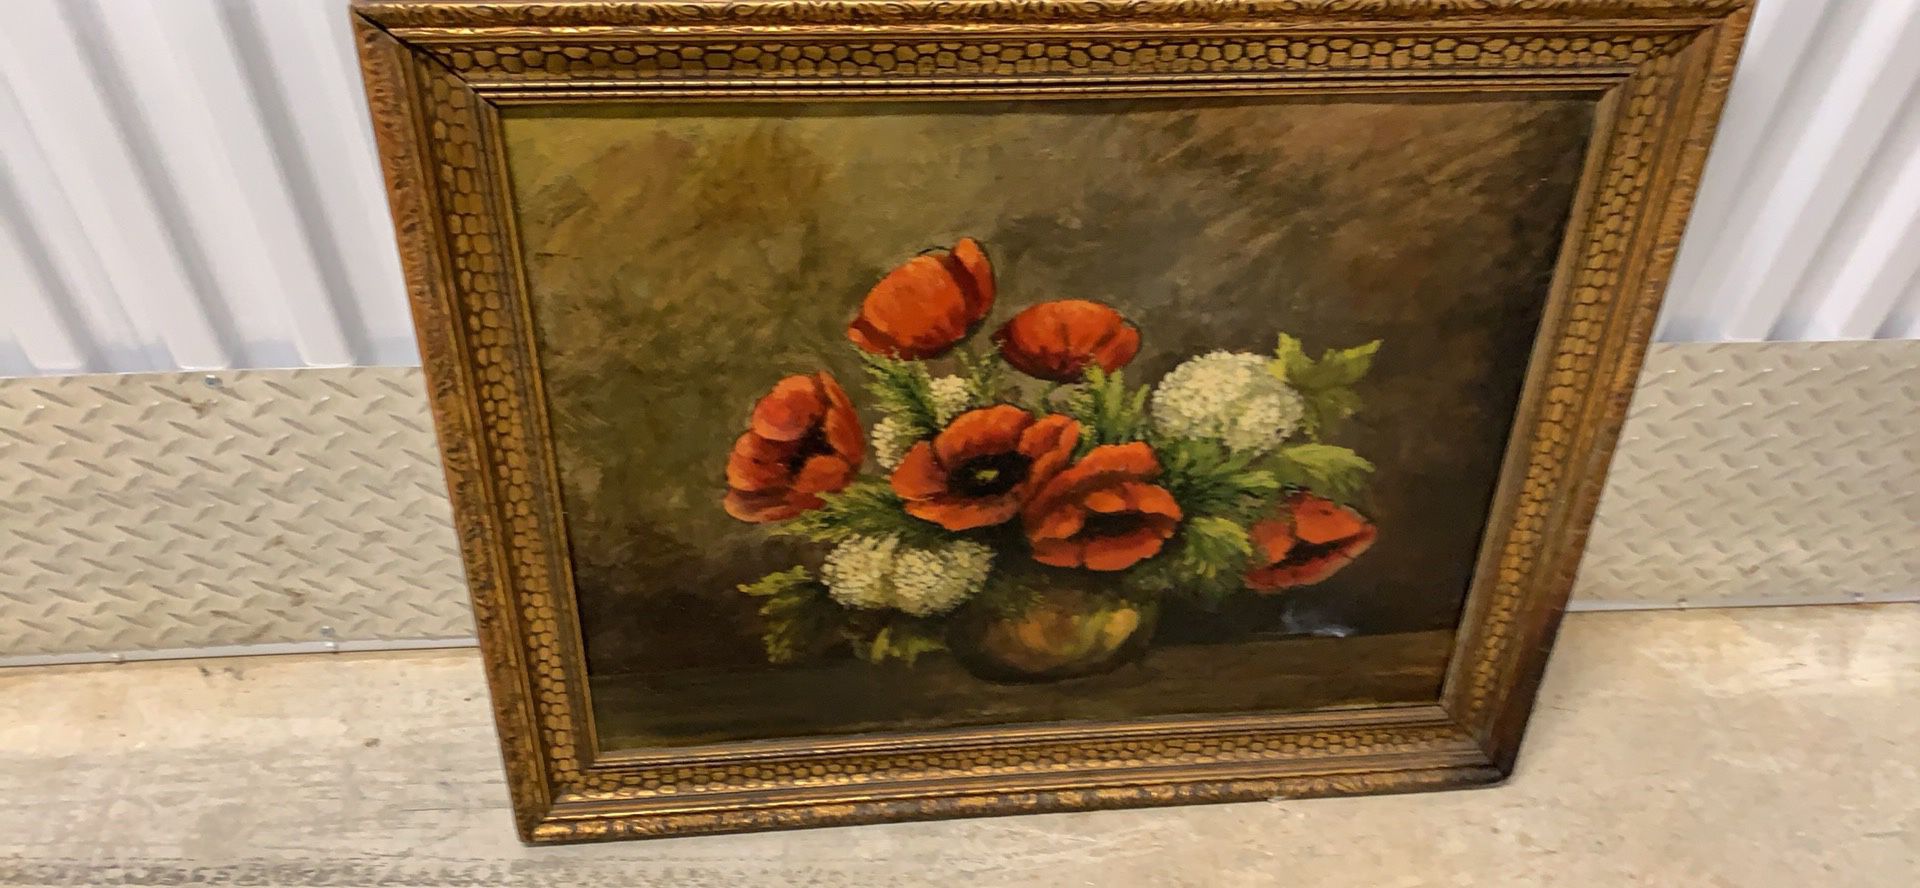 Vintage framed painting of flowers